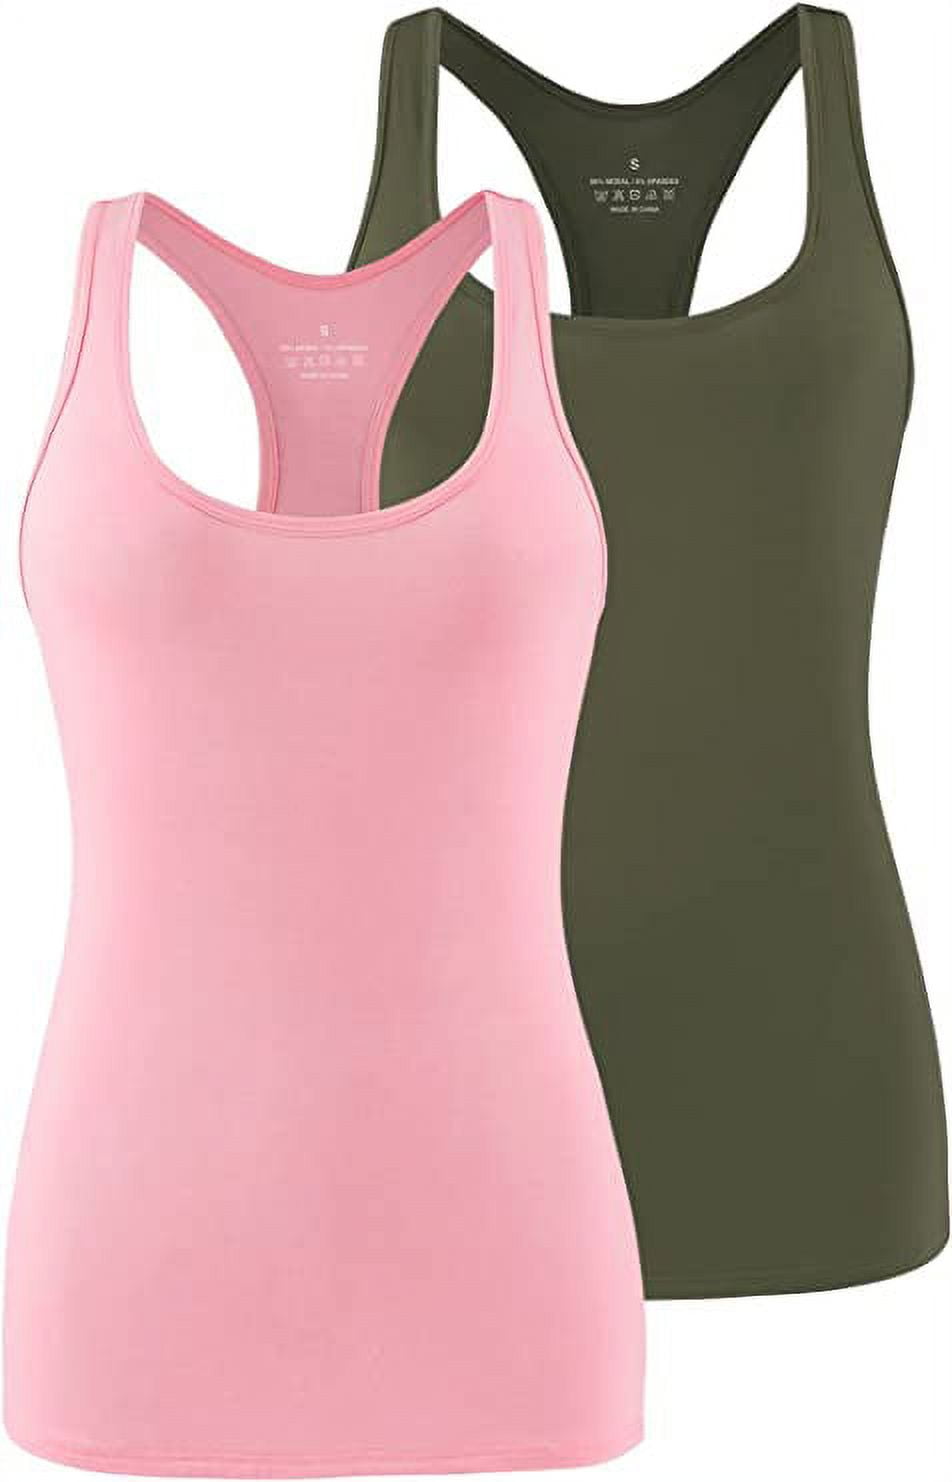 CRZ YOGA Women's Workout Tank Tops Racerback Yoga Sleeveless Top Athletic  Shirt